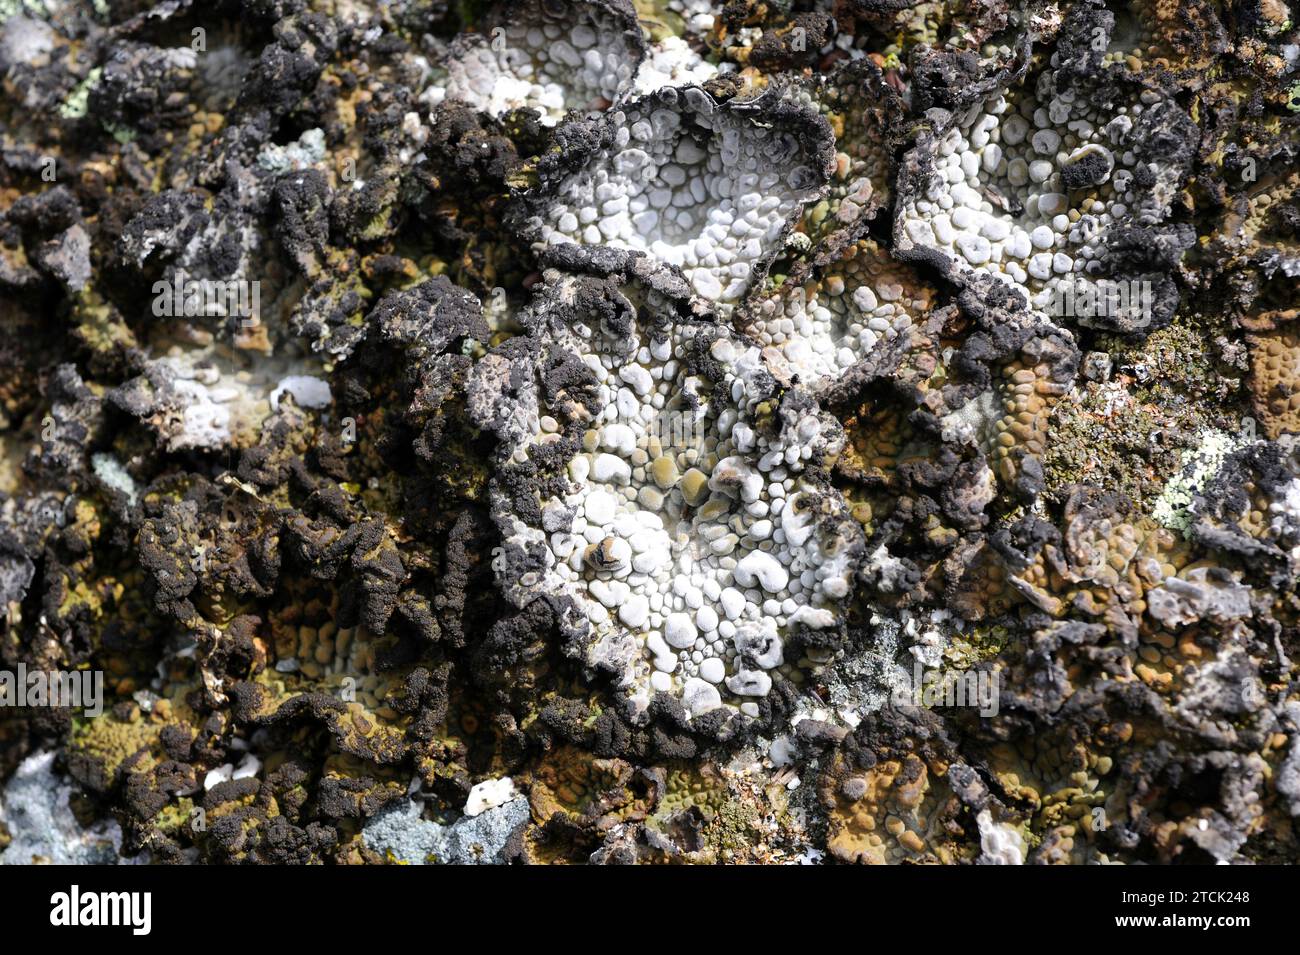 Umbilicaria pustulata or Lasallia pustulata is a foliose lichen that grows on siliceous rocks. This photo was taken in Sierra de Gredos, Avila provinc Stock Photo